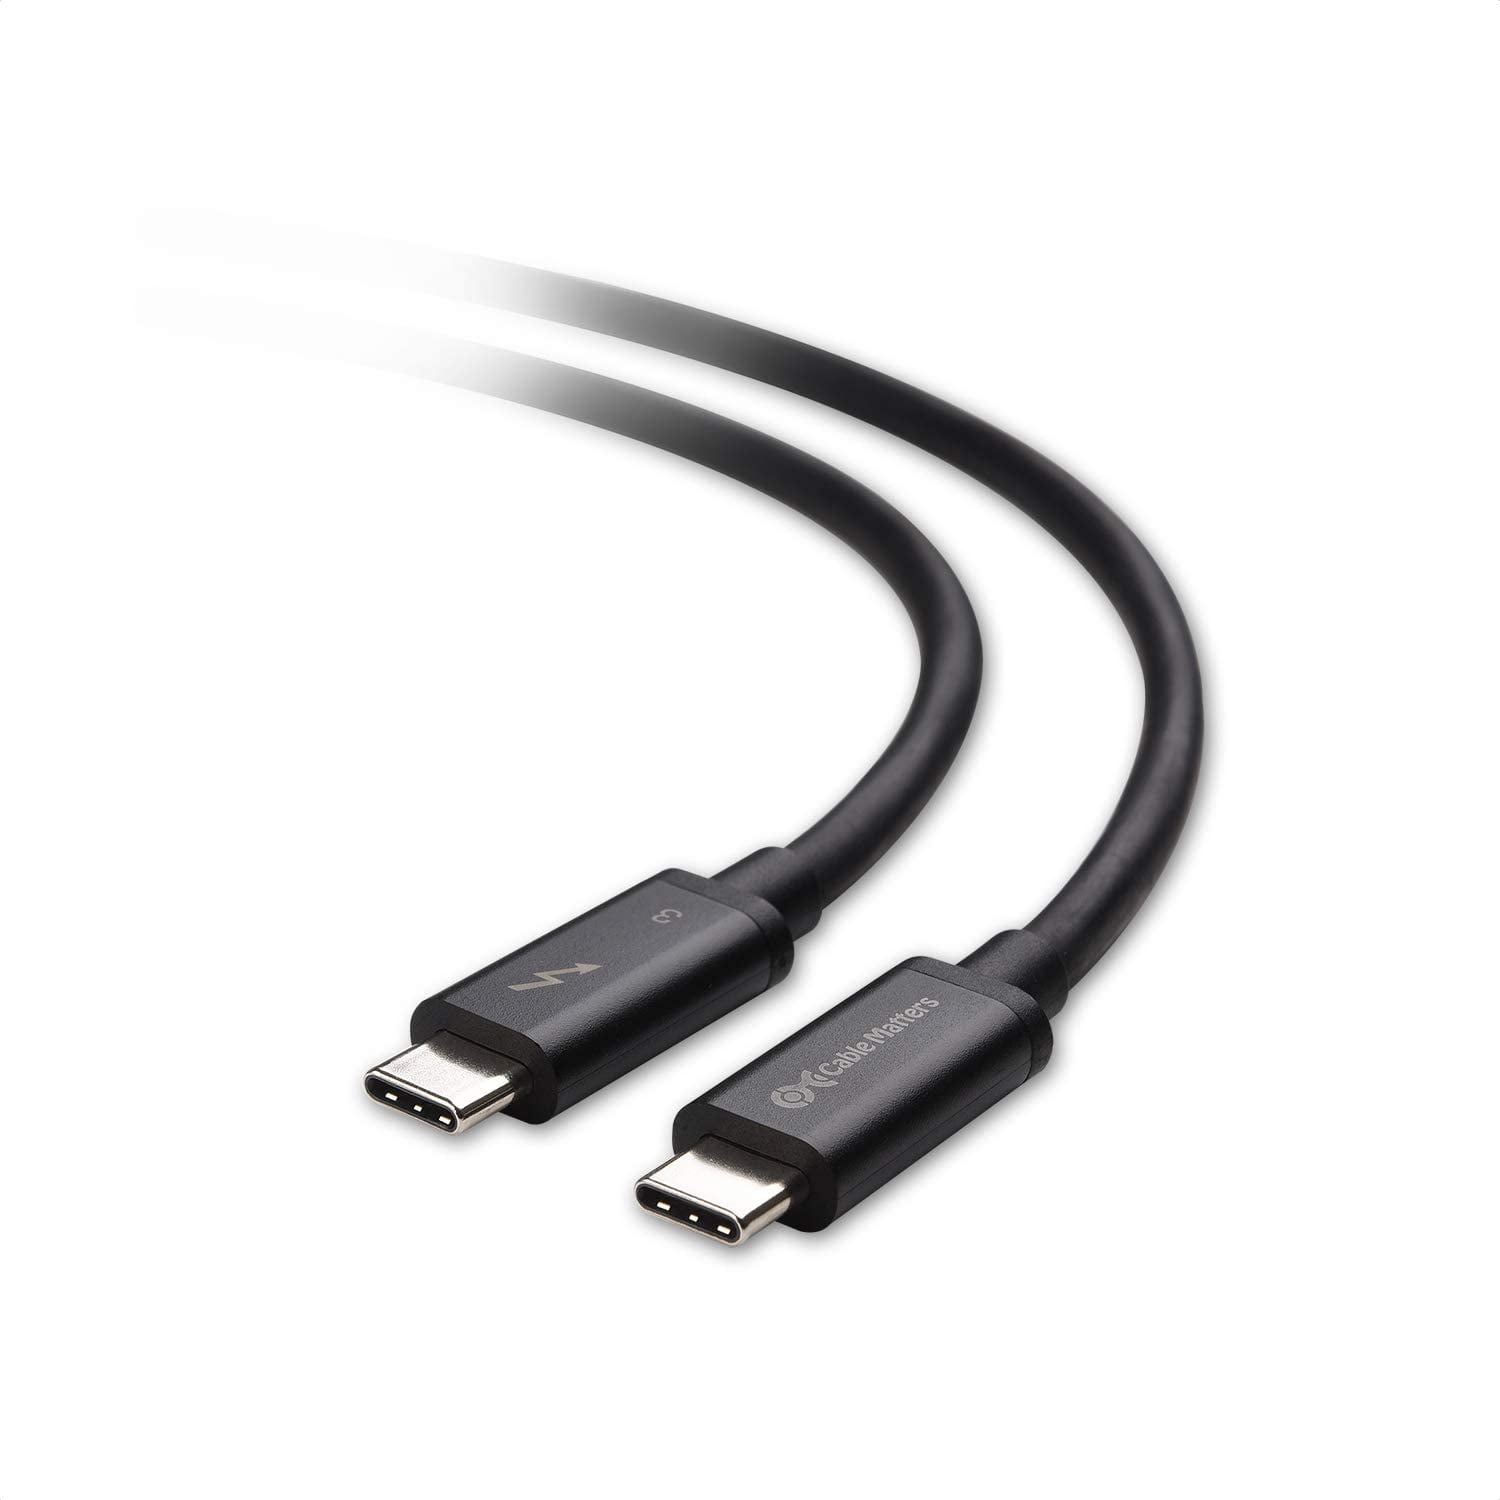 StarTech.com Thunderbolt 3 Cable - 2m, 20 Gbit/s, USB-C